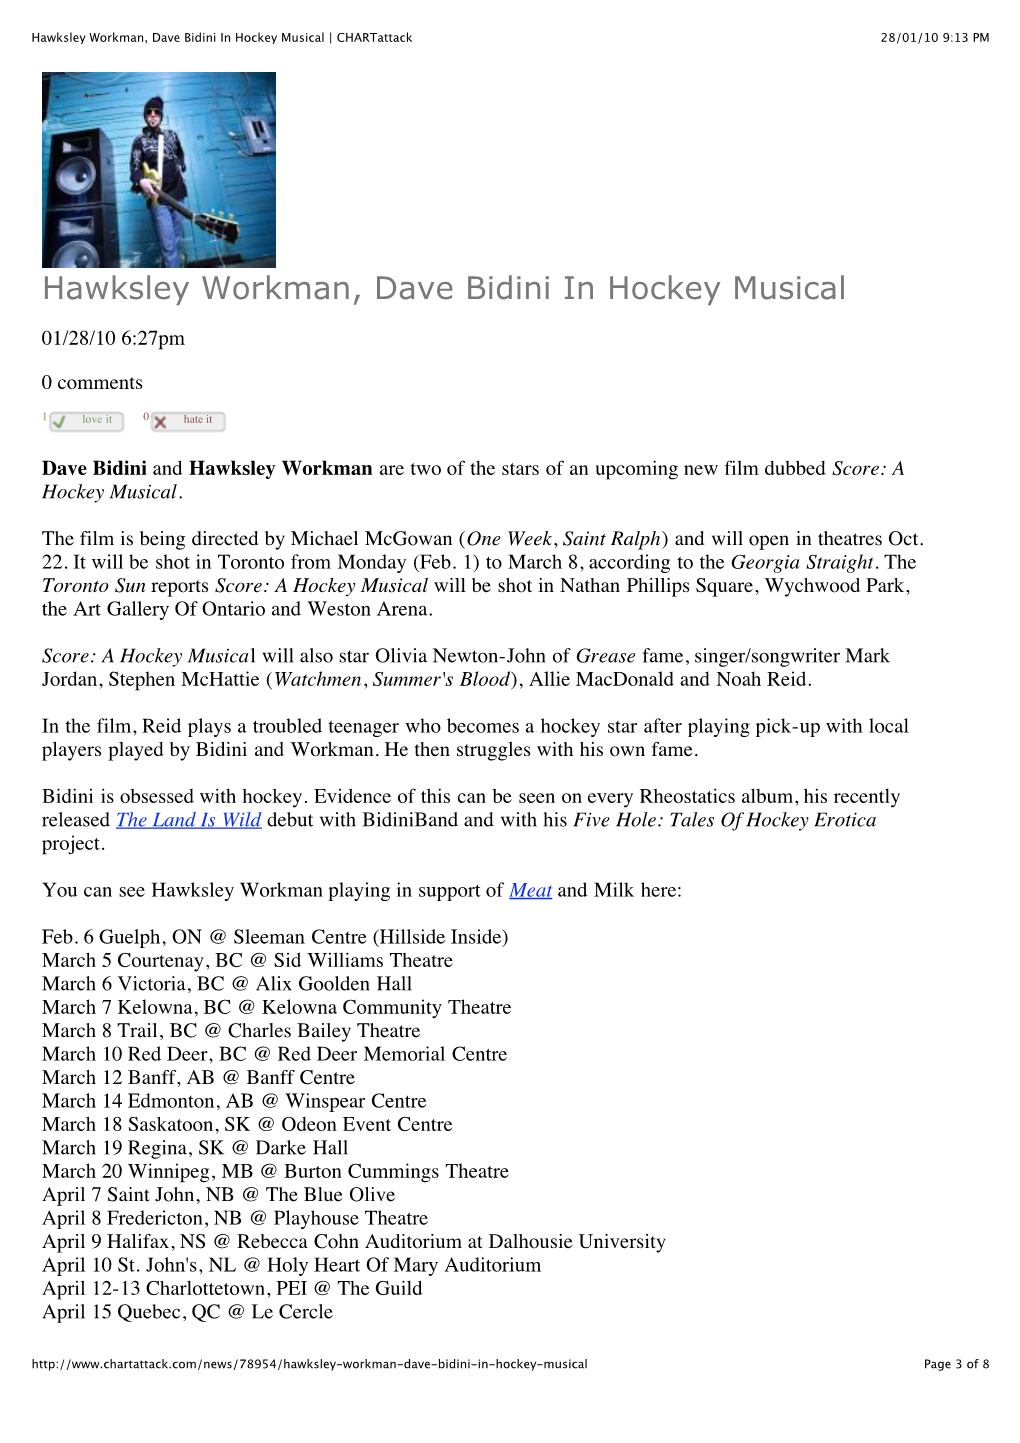 Hawksley Workman, Dave Bidini in Hockey Musical | Chartattack 28/01/10 9:13 PM